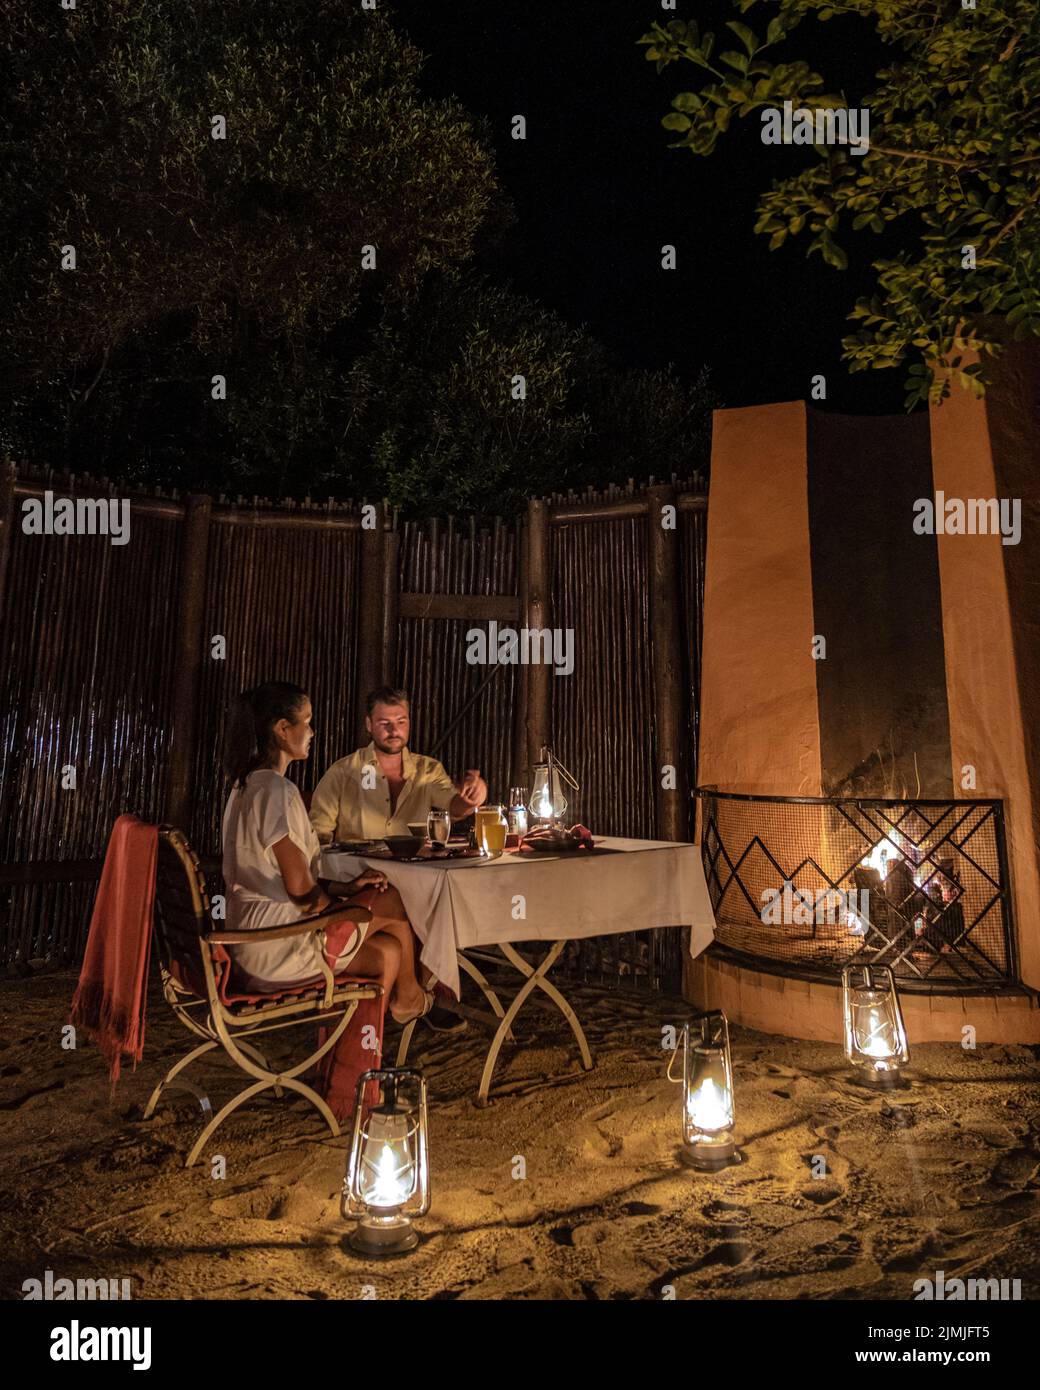 Couple man and woman having dinner in the bush at night, South Africa Kwazulu natal, luxury safari lodge in the bush Stock Photo